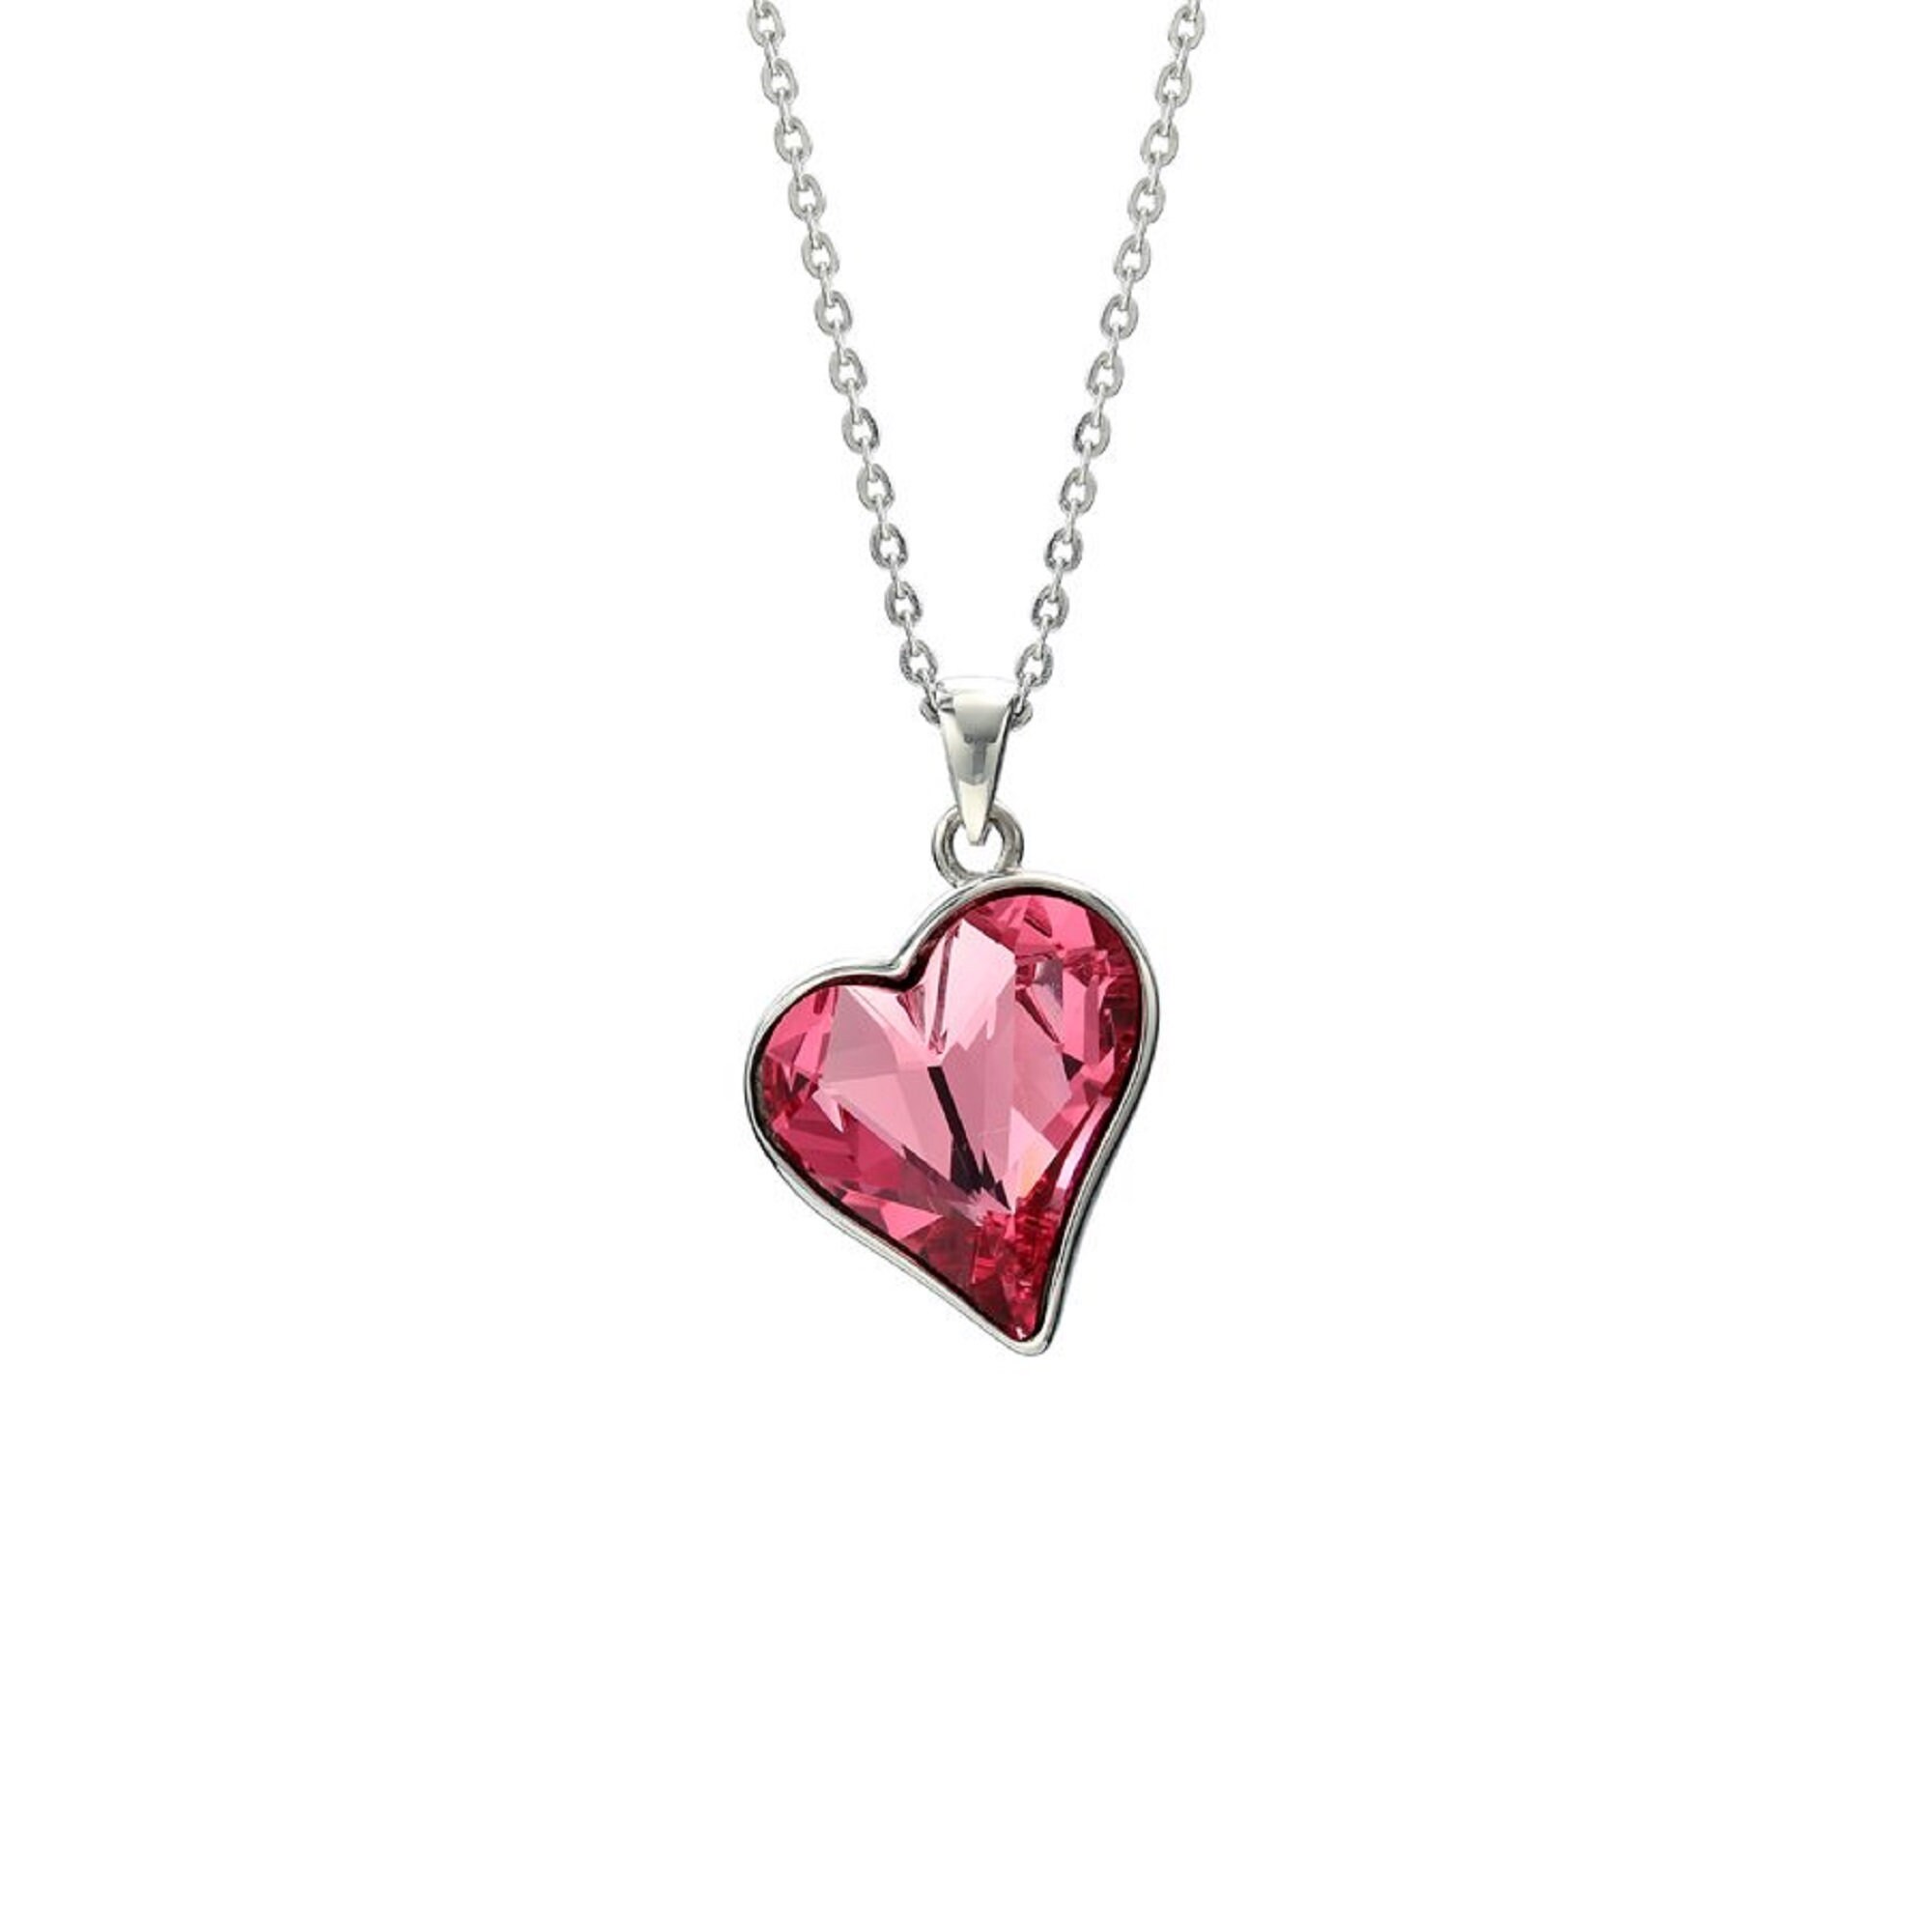 Macys Pink Swarovski Crystal Heart Pendant Necklace Sterling Silver 18